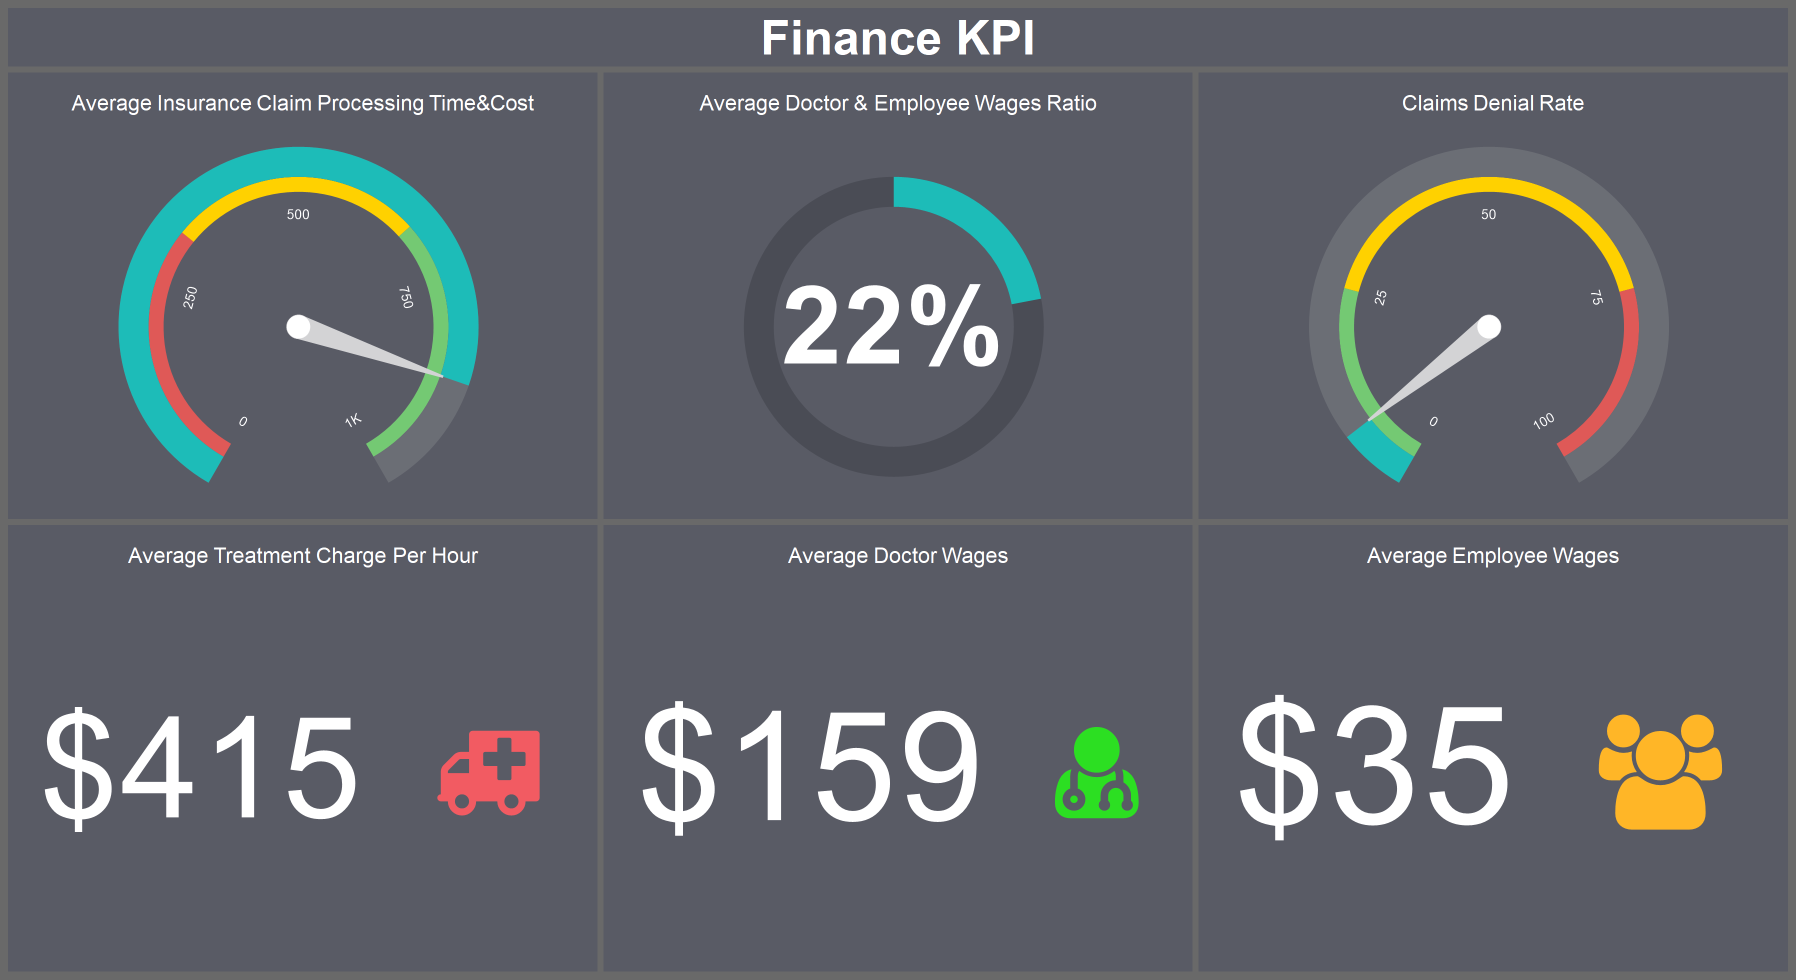 Finance KPI